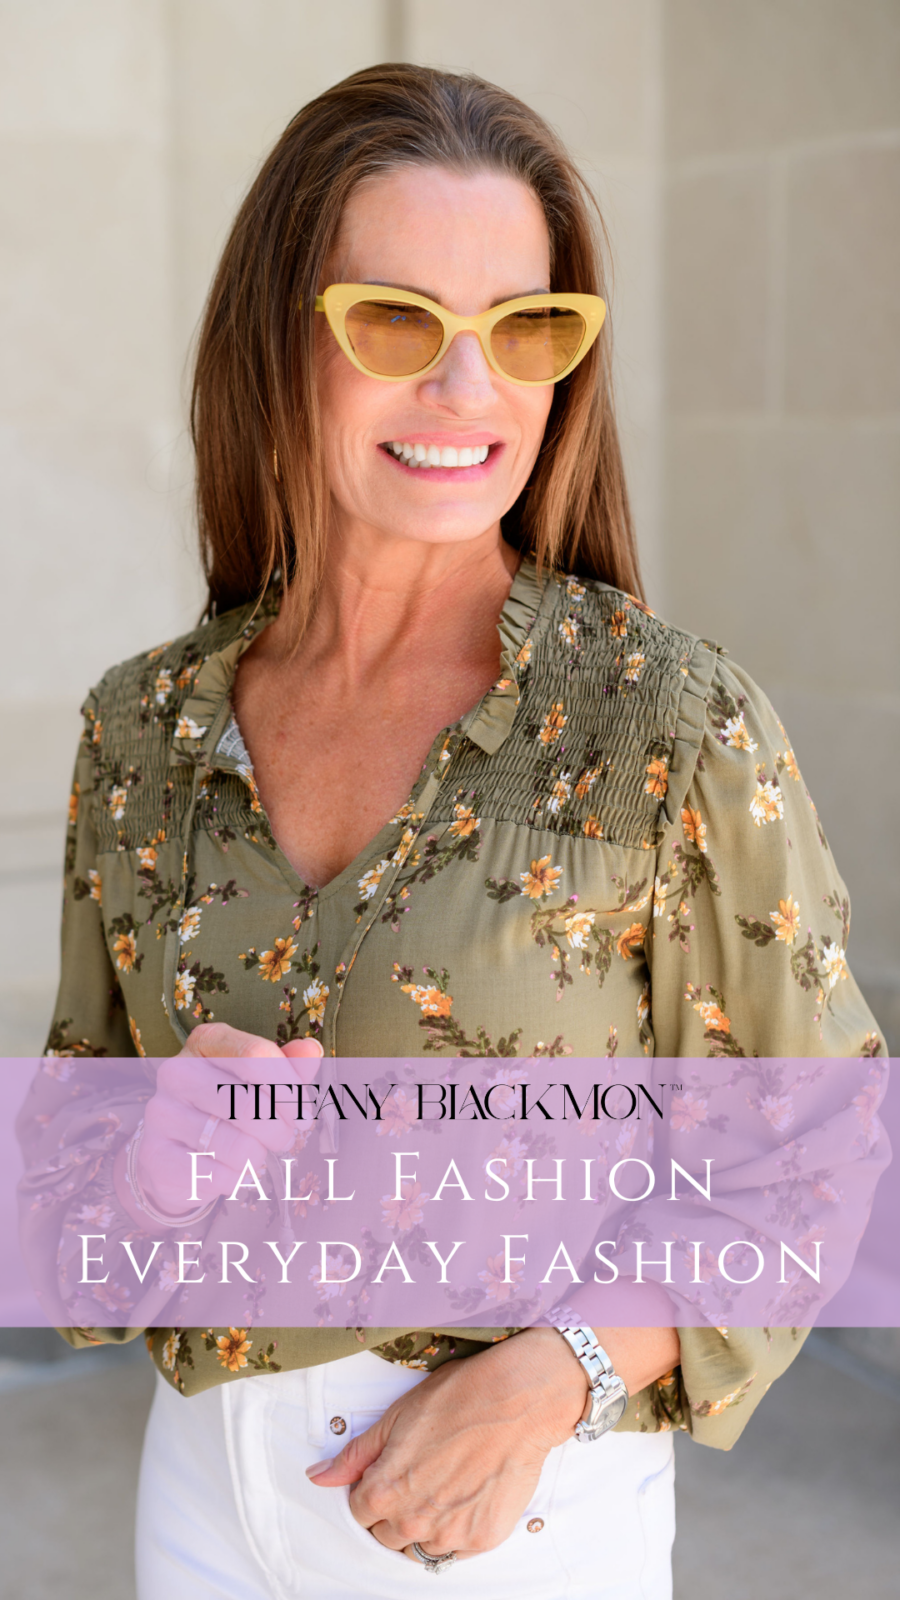 Fall Fashion Everyday Looks 

#Fall #fashion #fashionlooks #everyday #looks #top #bottoms #shorts #Shirt #blouse #dress #fashionstatements #texture #layers #colors 